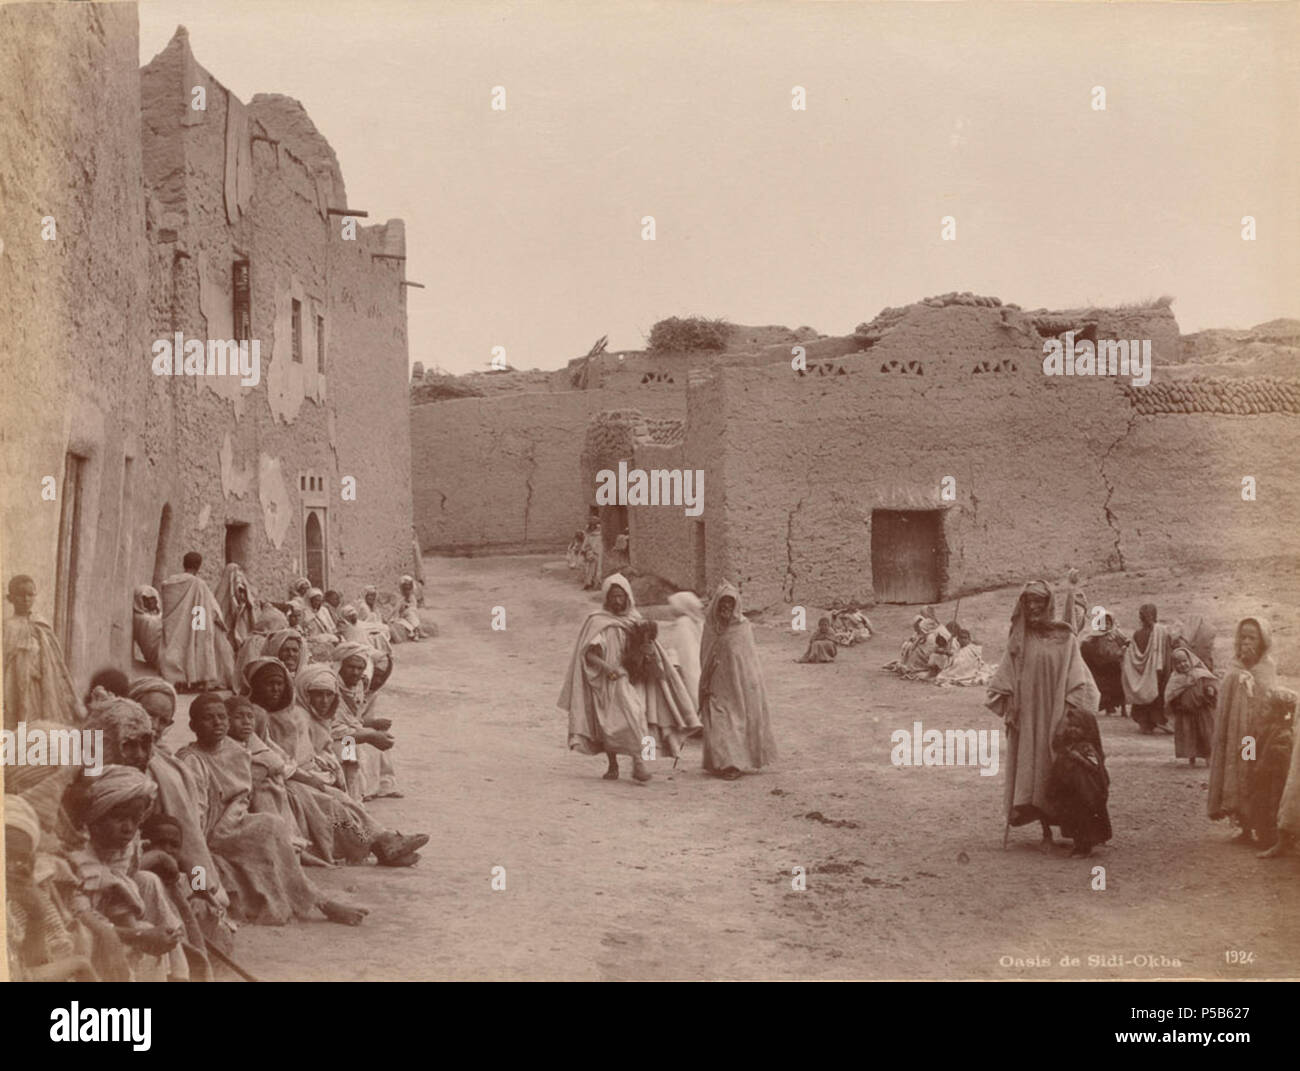 N/A. Inglese: Street Sidi Okba - (Francese Algeria) . Tupper, William Vaughn, 1835-1898 84 Algeria 1800s Tupper fotodiari collezione 11 Foto Stock